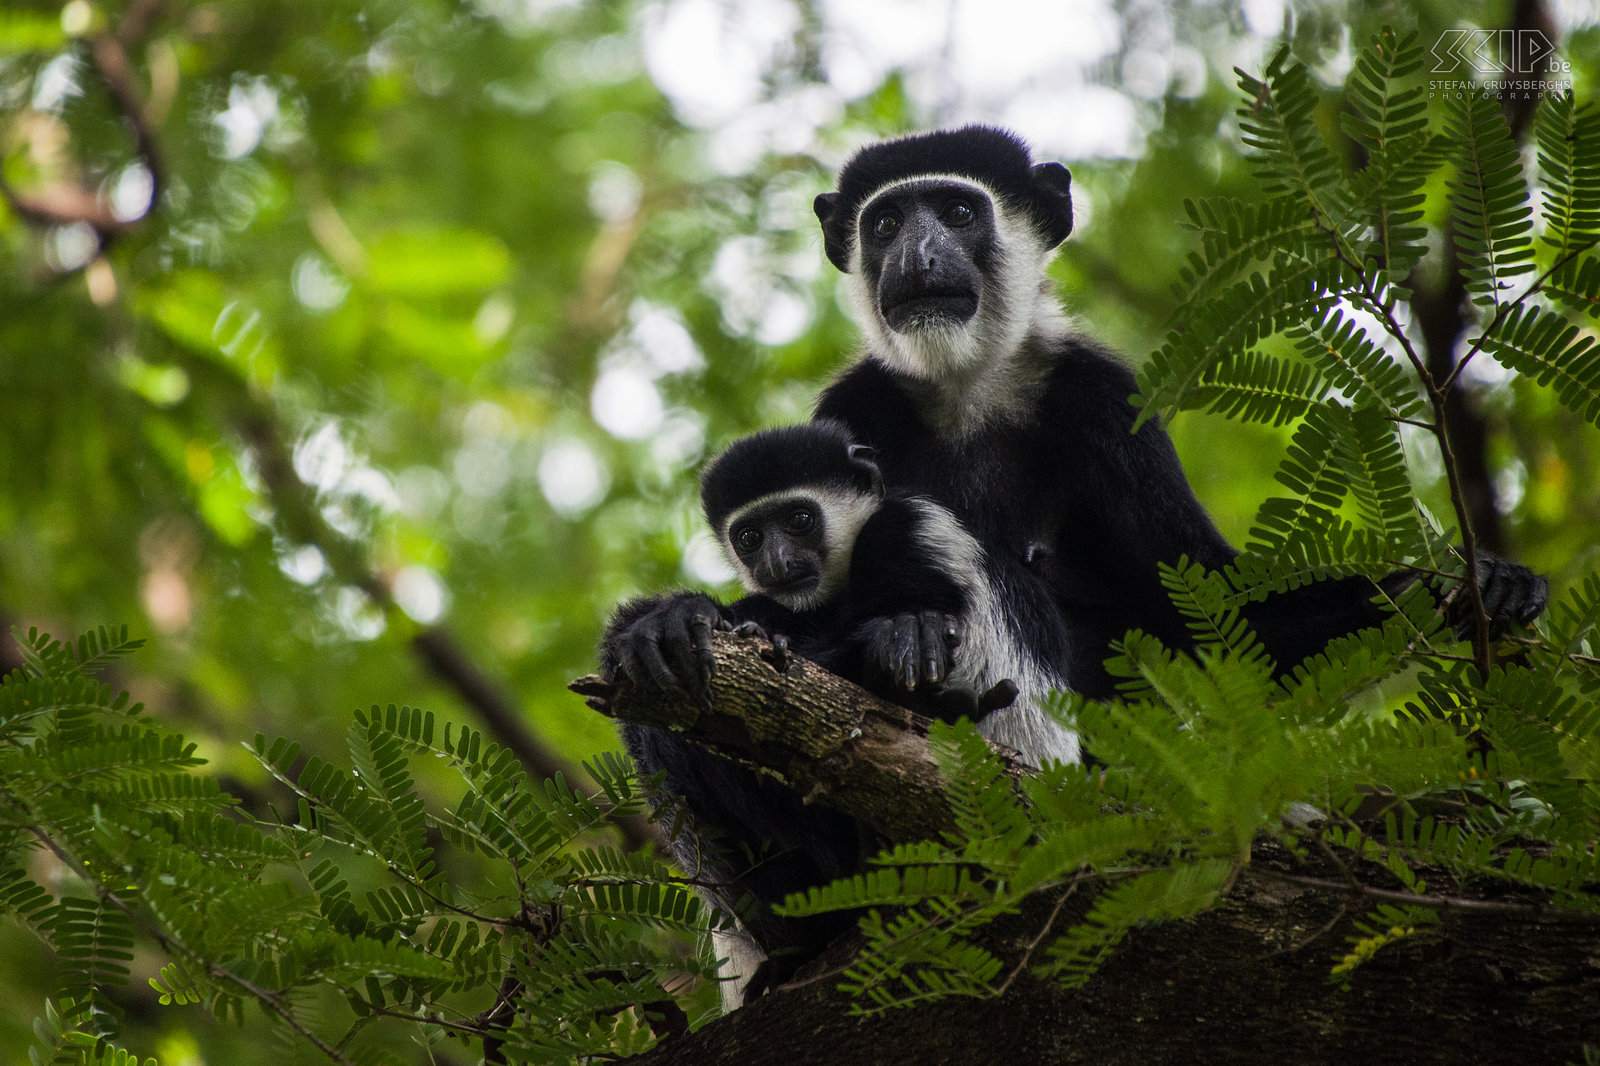 Mago - Baby colobus aap met moeder Een baby colobus aap samen met z’n moeder hoog in de boom. Stefan Cruysberghs